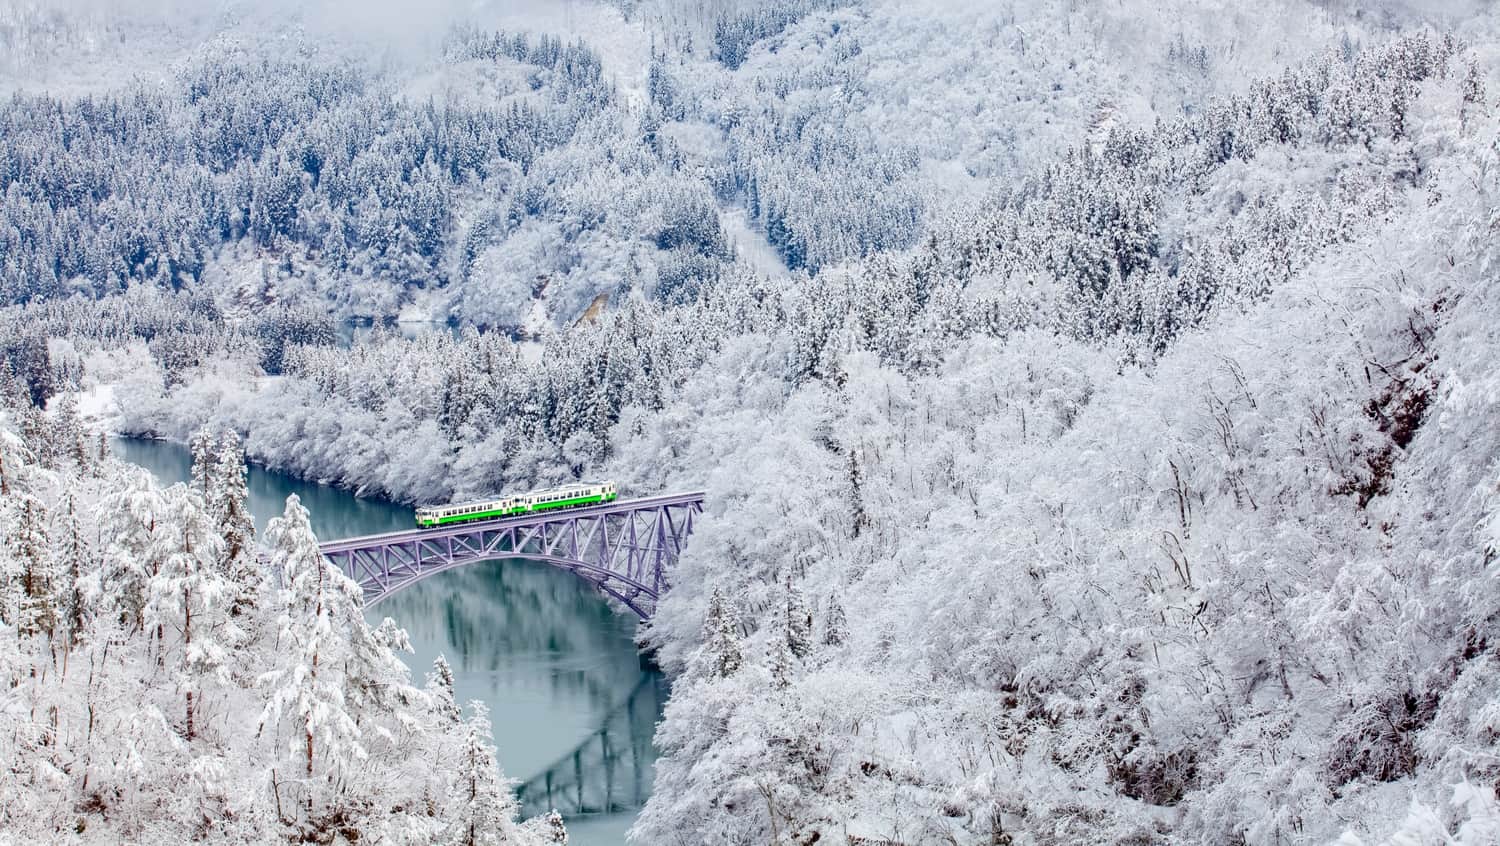 Japanese train in winter